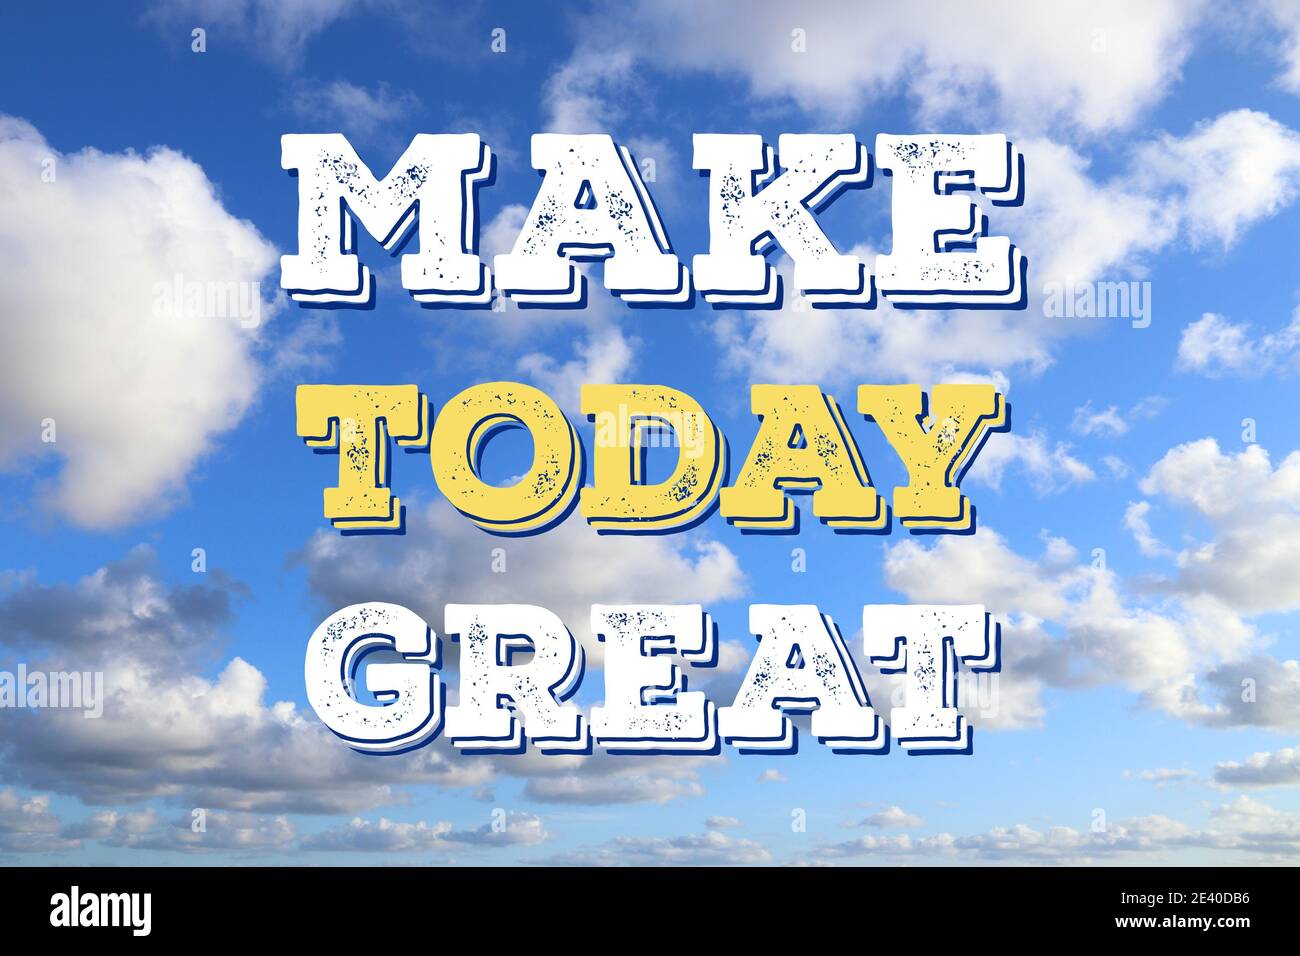 Machen Sie heute großartig. Positive Energie. Motivationszitat-Poster. Erfolgsmotivation. Stockfoto